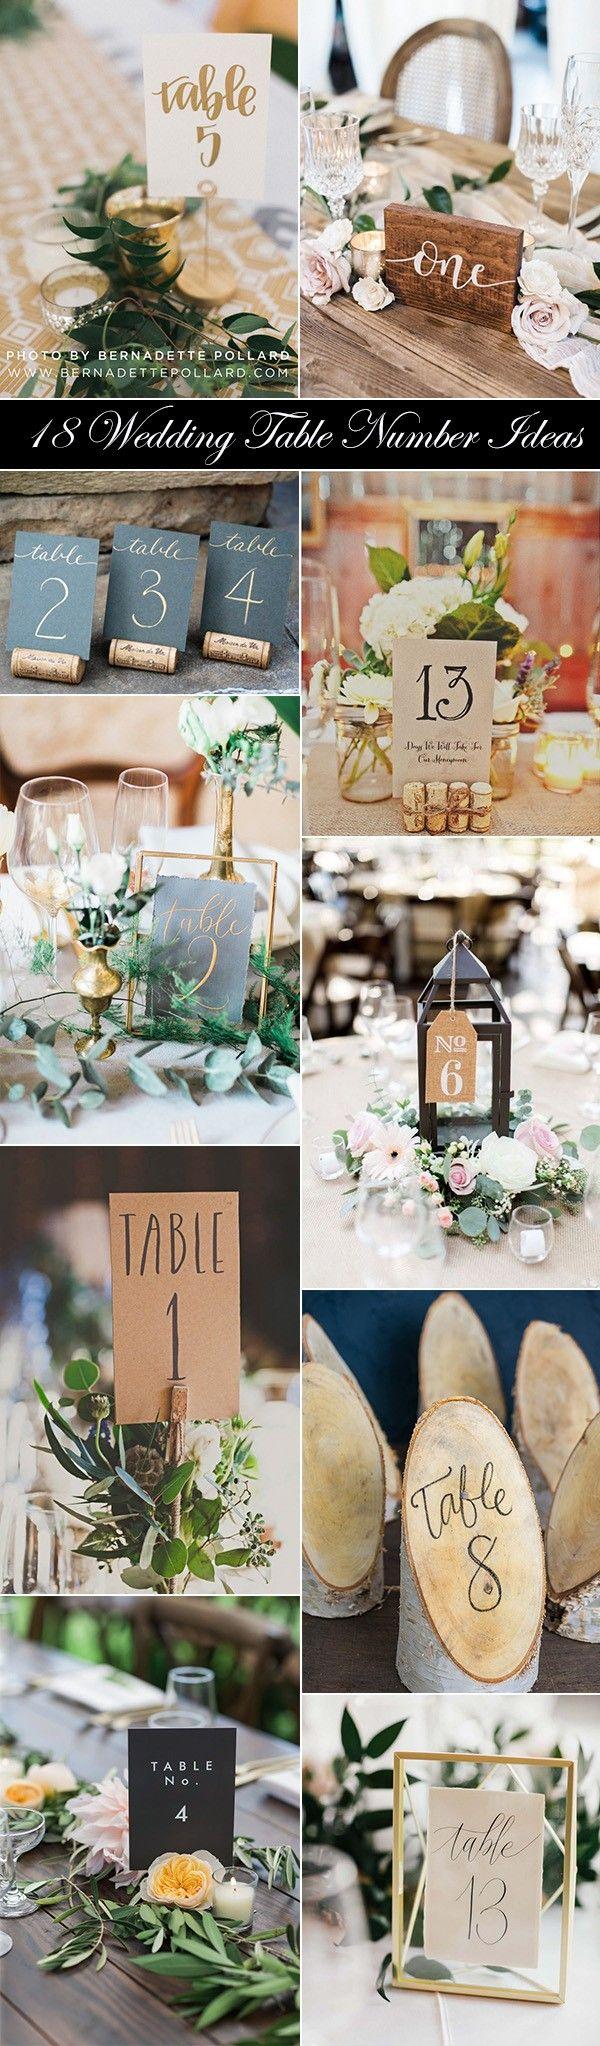 Hochzeit - 18 Inspiring Wedding Table Number Ideas To Love